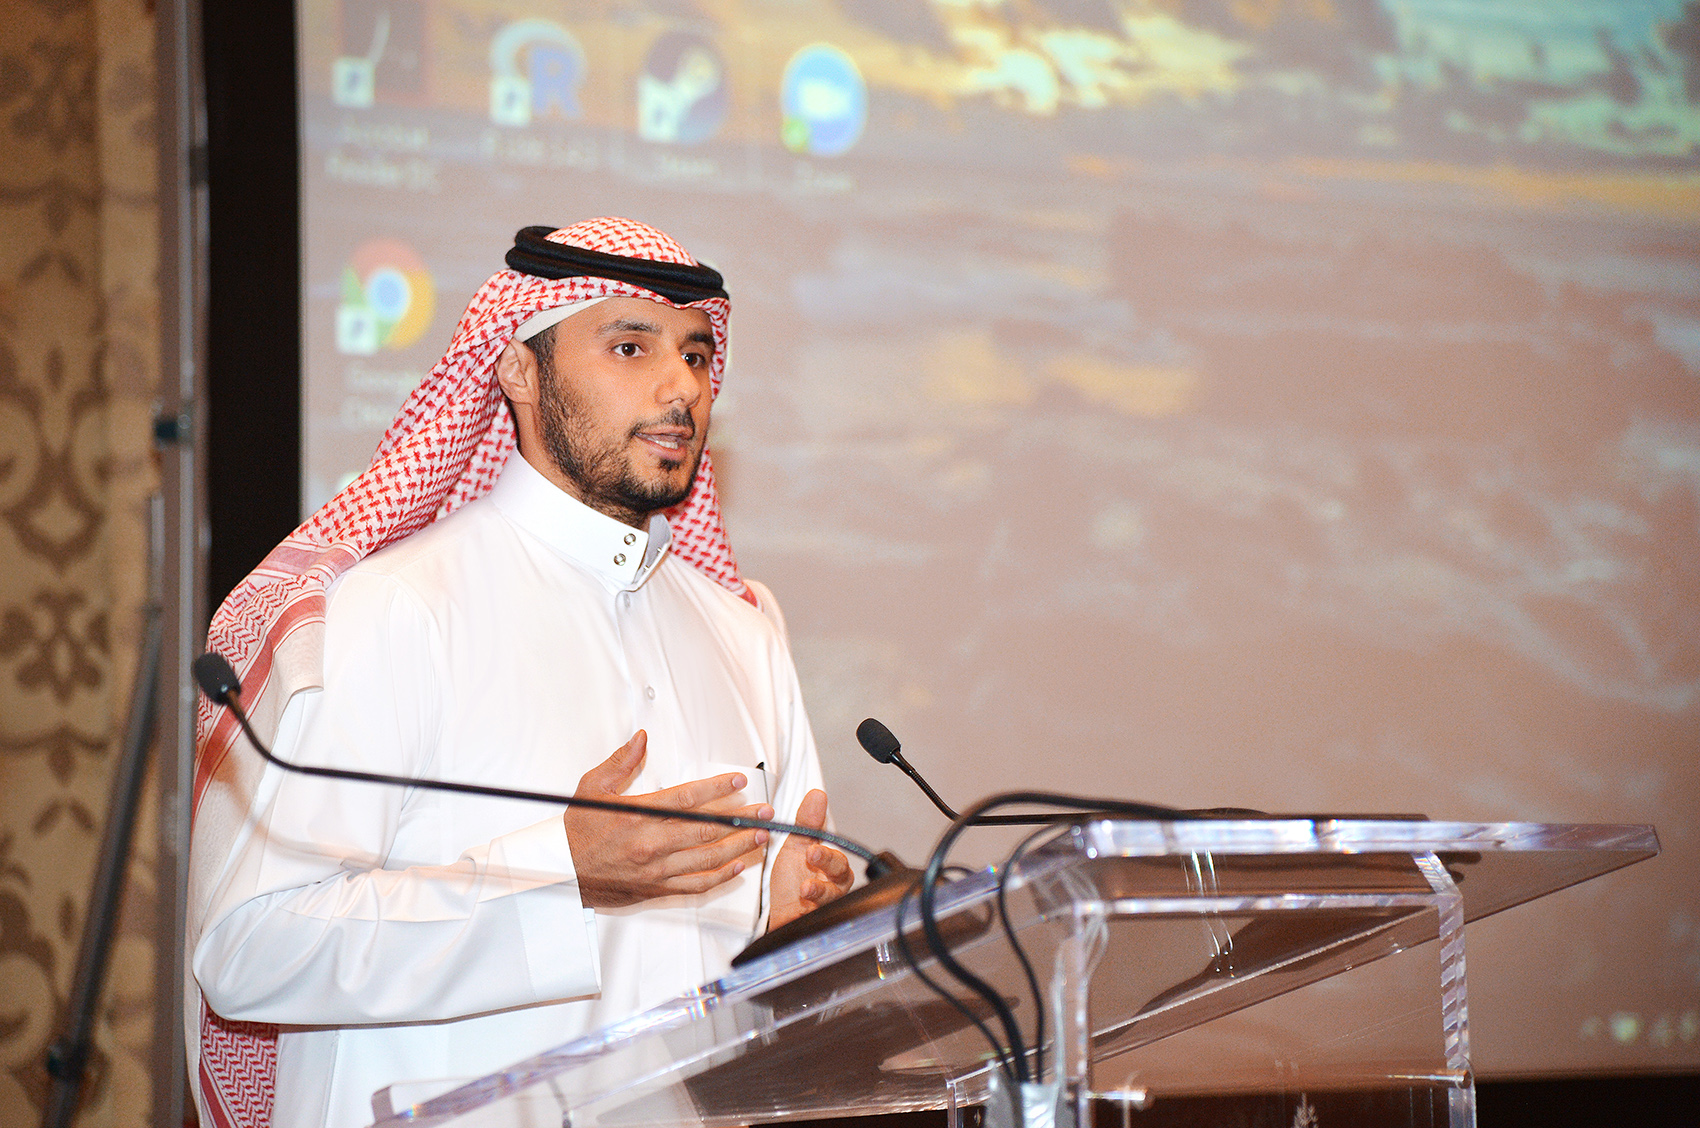 Bin talal khaled alwaleed bin prince Saudi Prince,